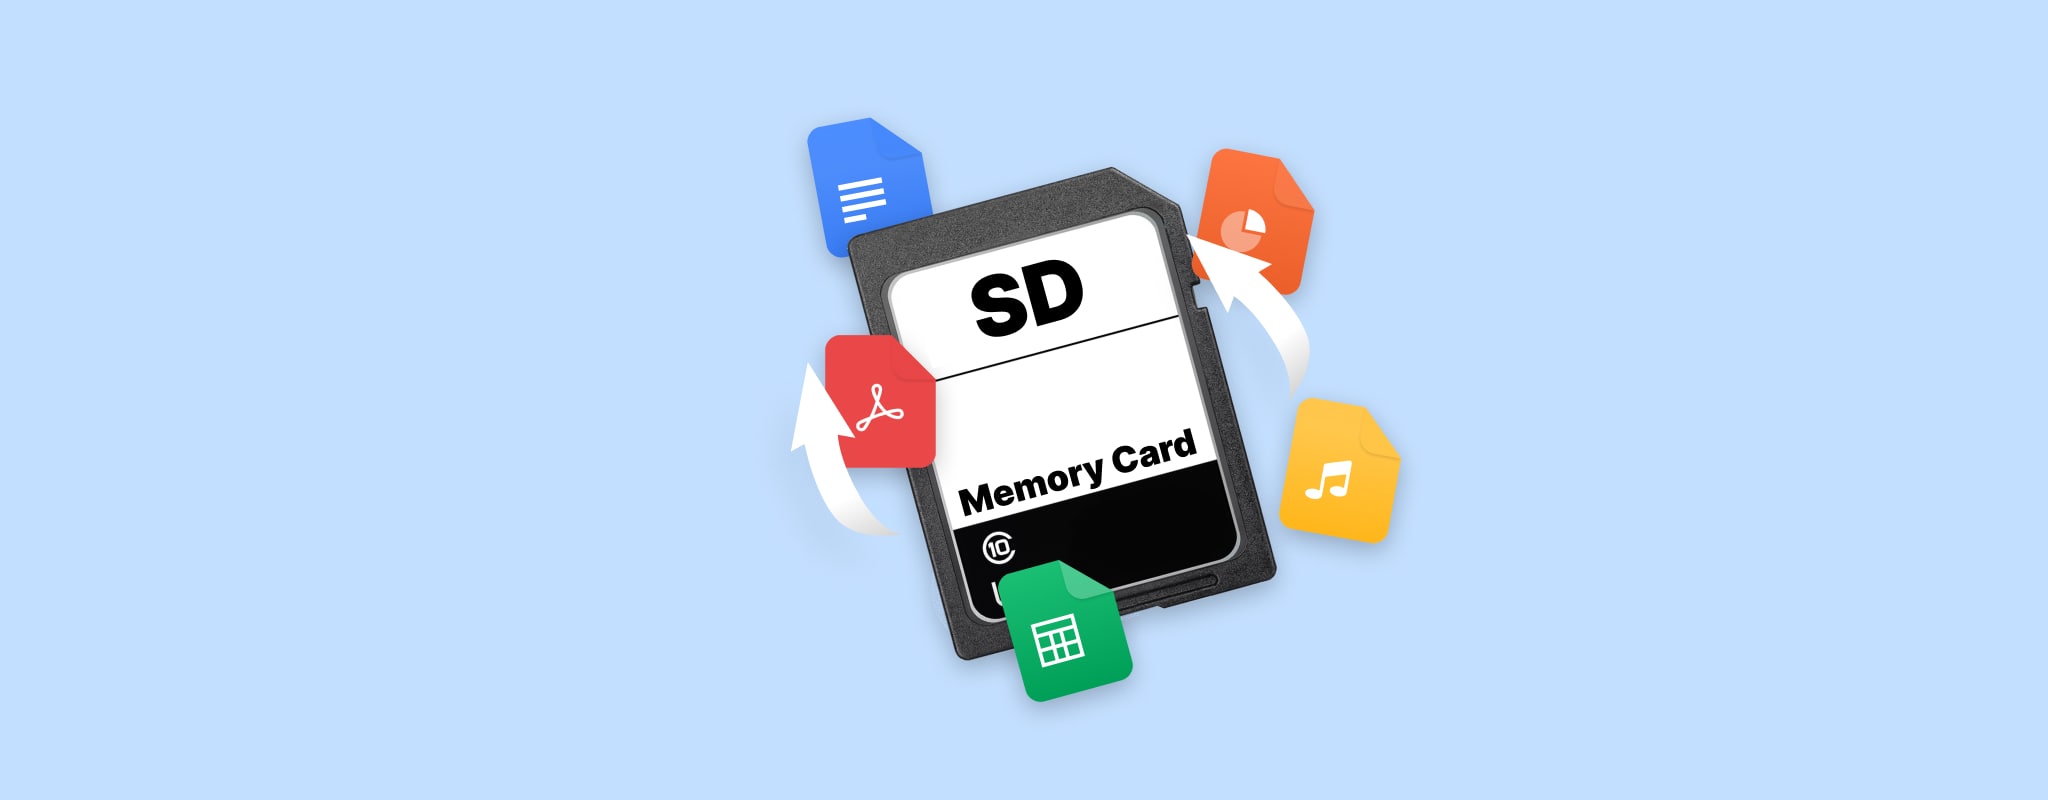 restore sd card to full capacity